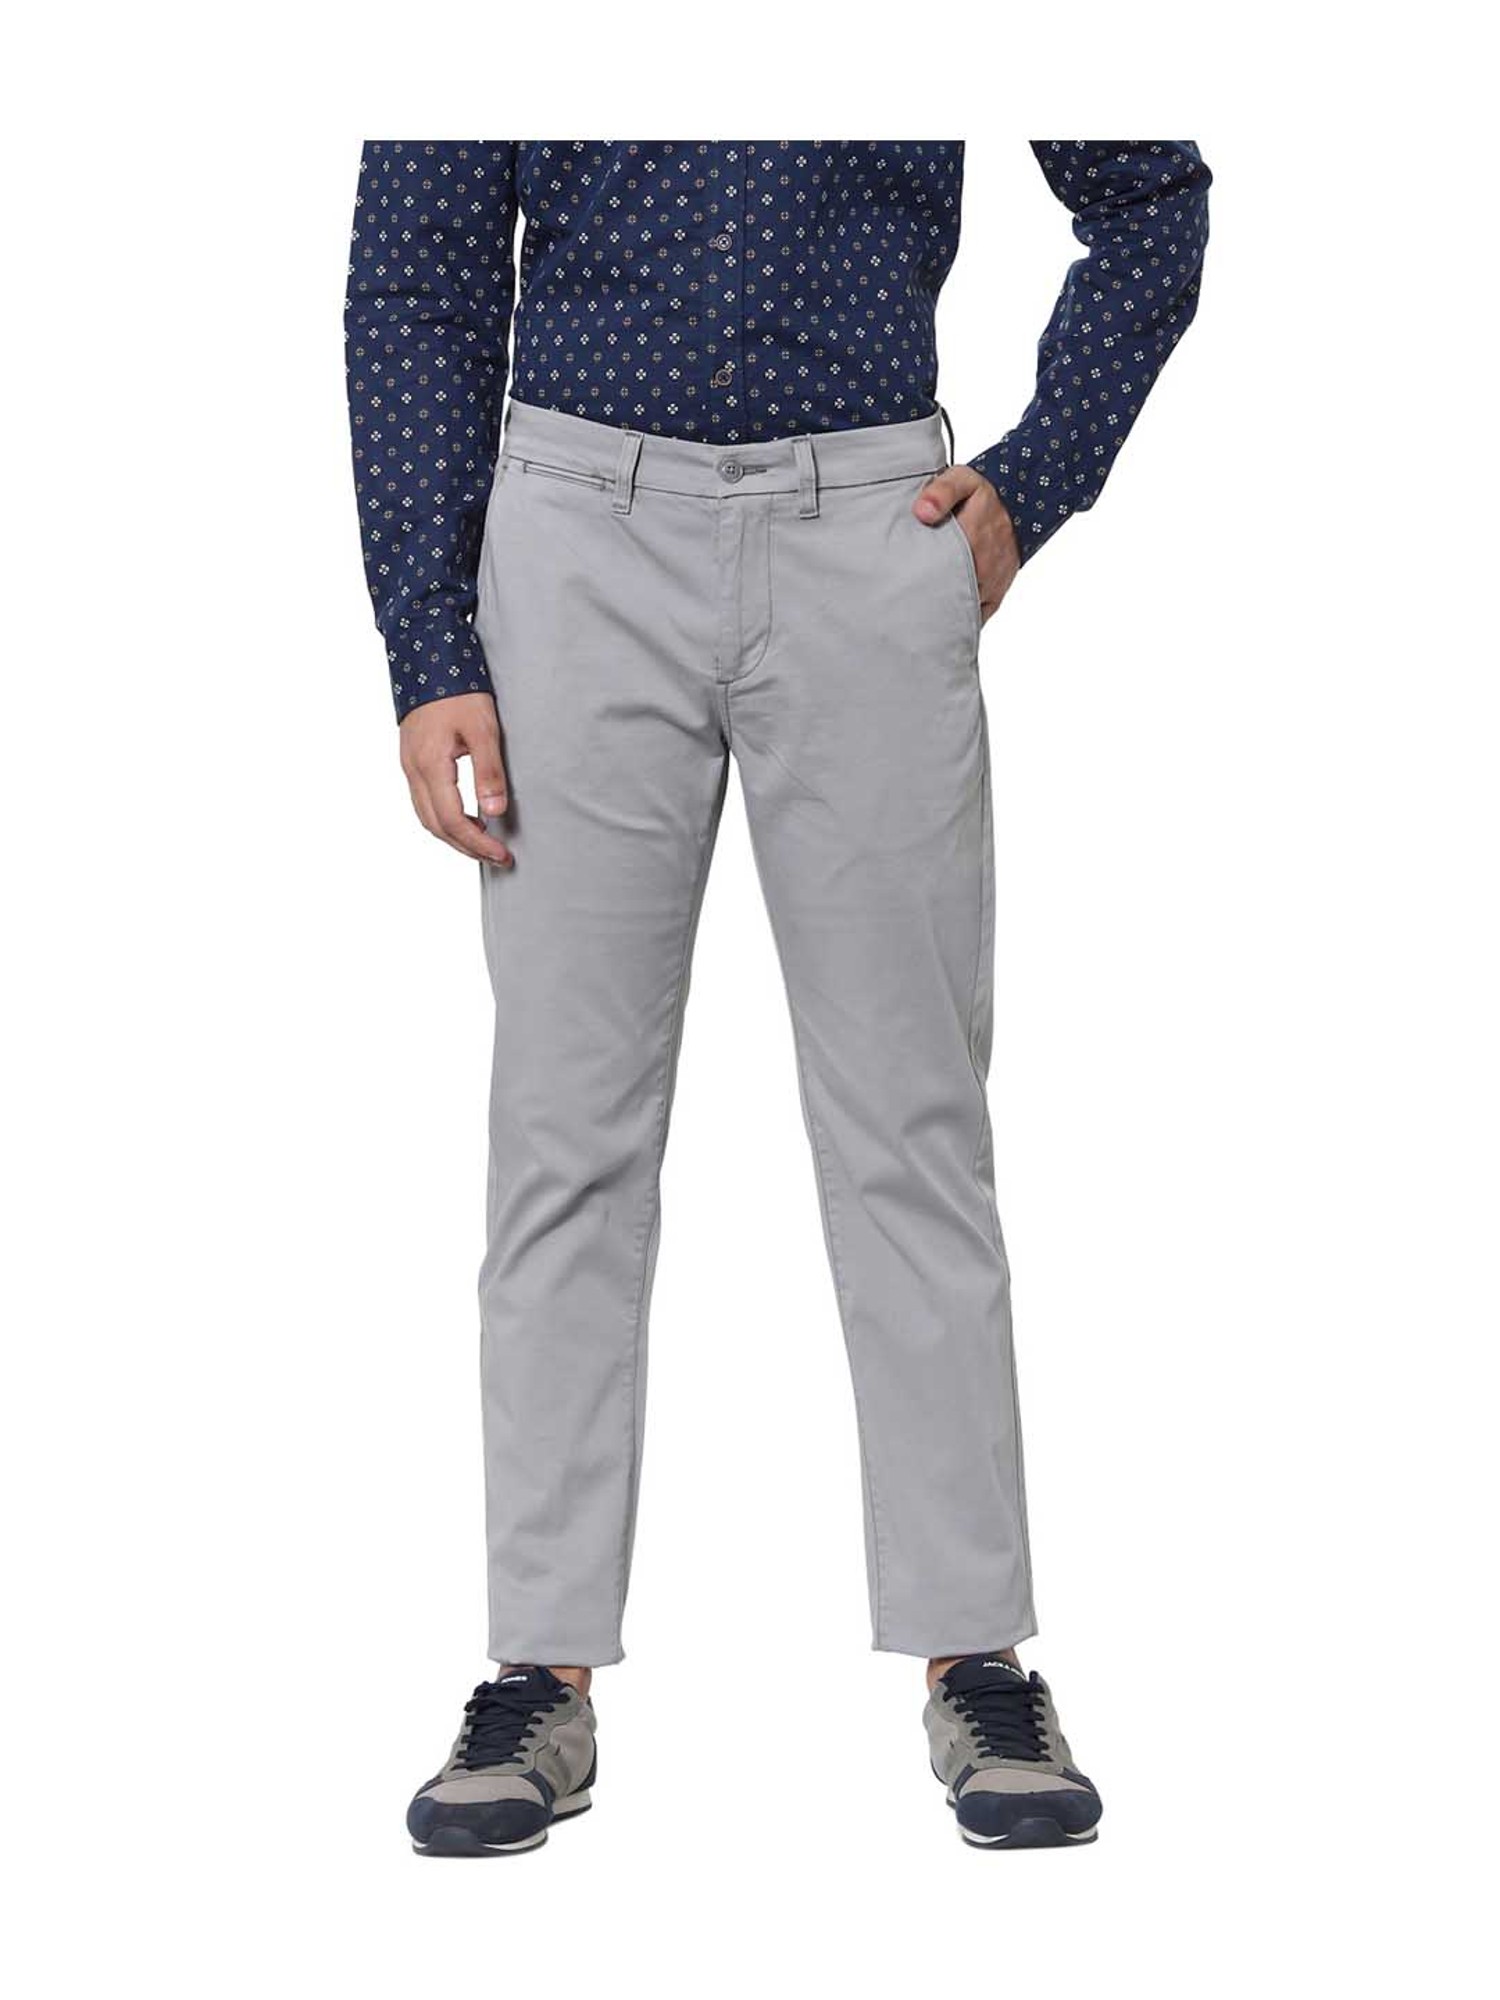 Jack  Jones Casual Trousers  Buy Jack  Jones Yellow Mid Rise Regular Fit  Pants 28 OnlineNykaa fashion